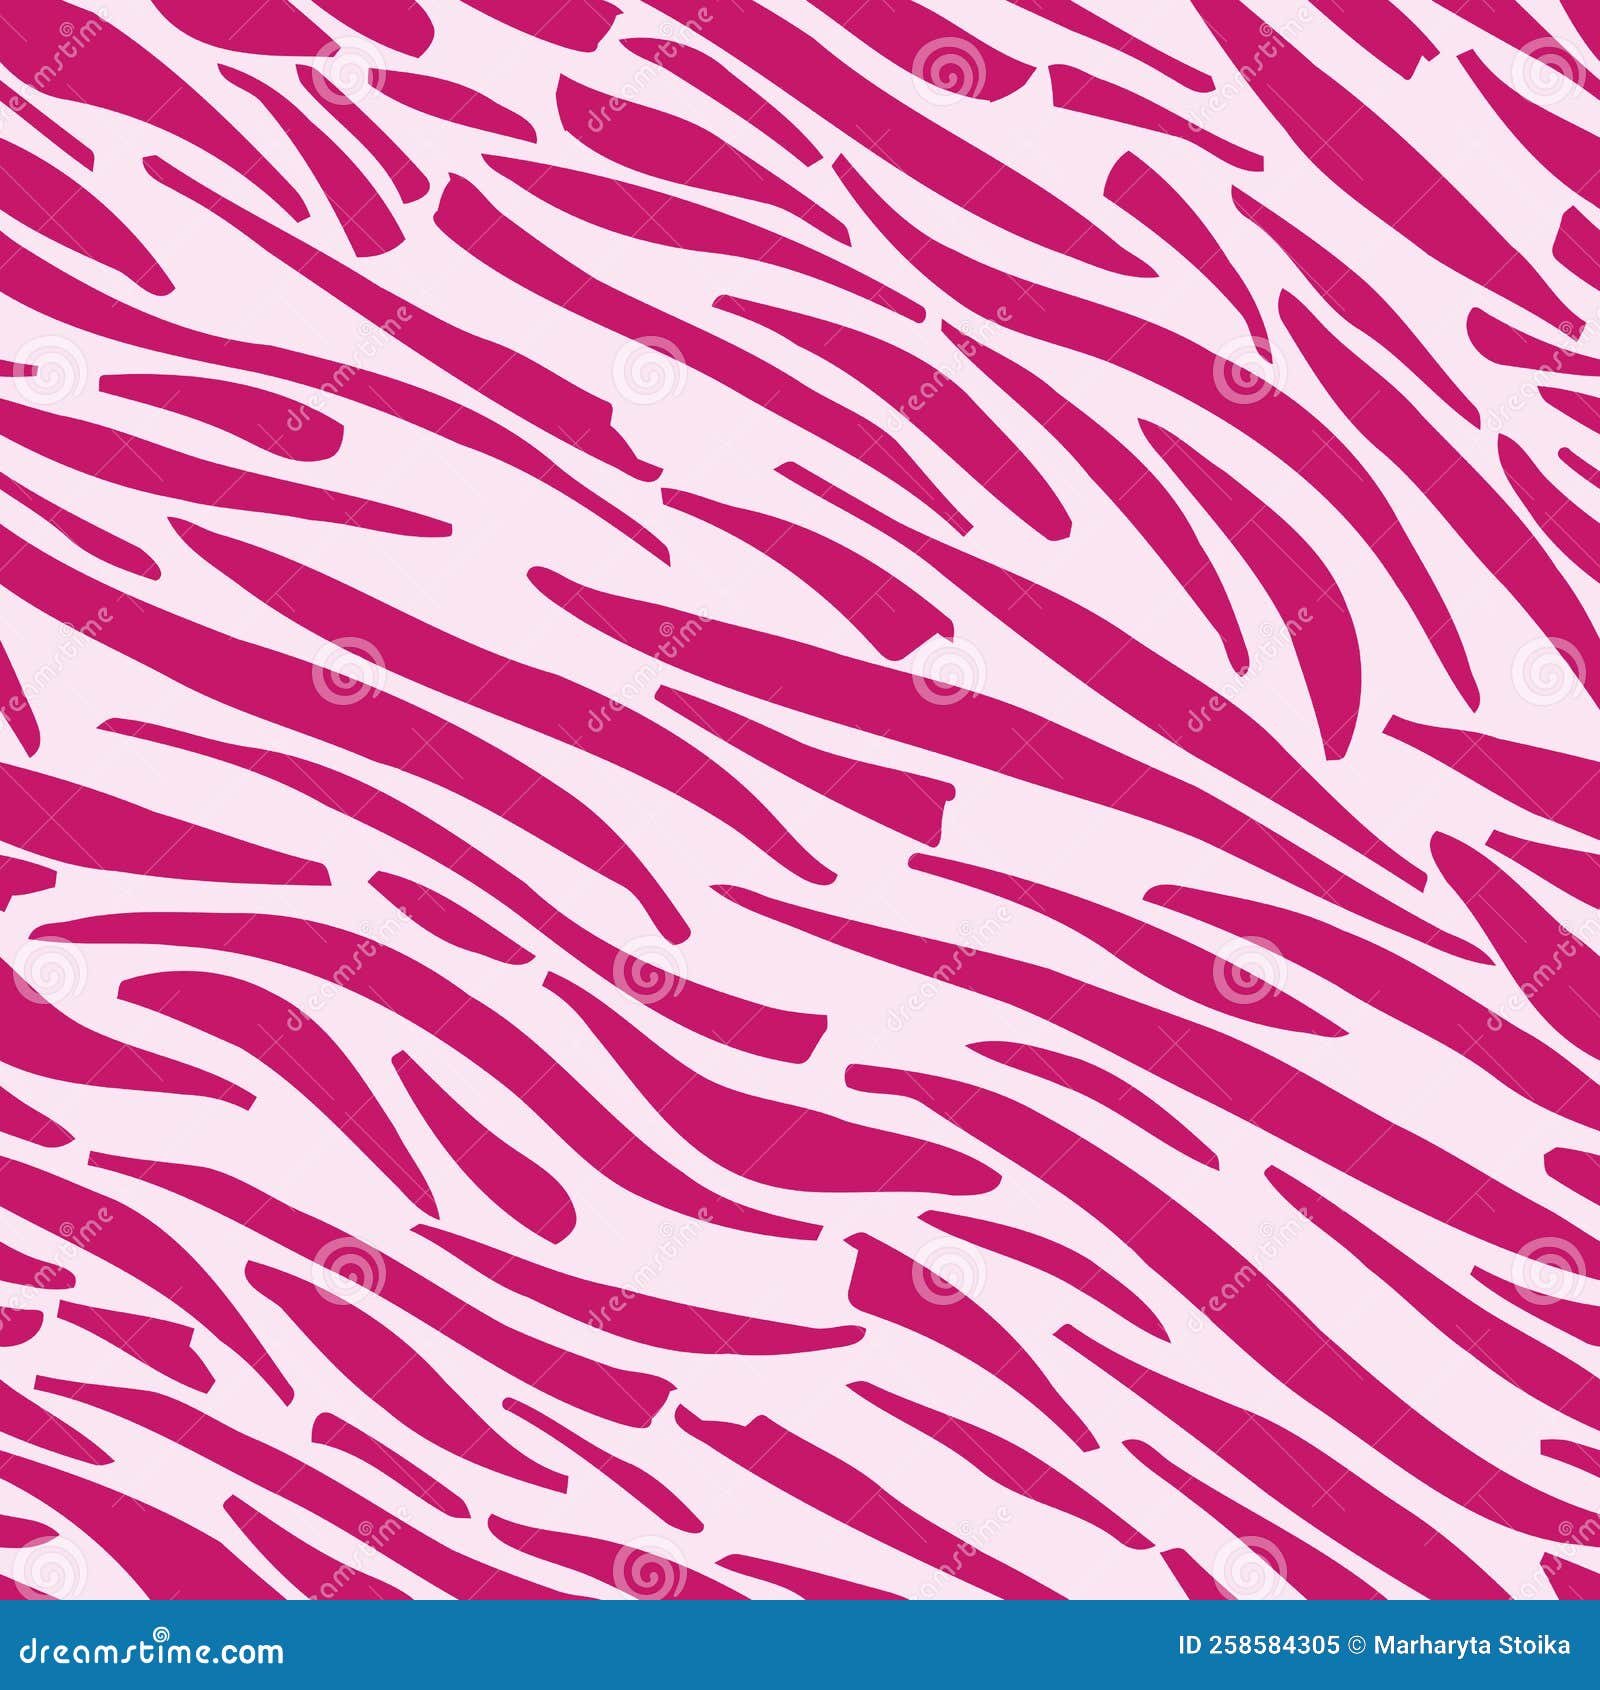 Awsome Backgrounds  Wallpapers  Pink Zebra Print Wallpaper  ClipArt Best   ClipArt Best